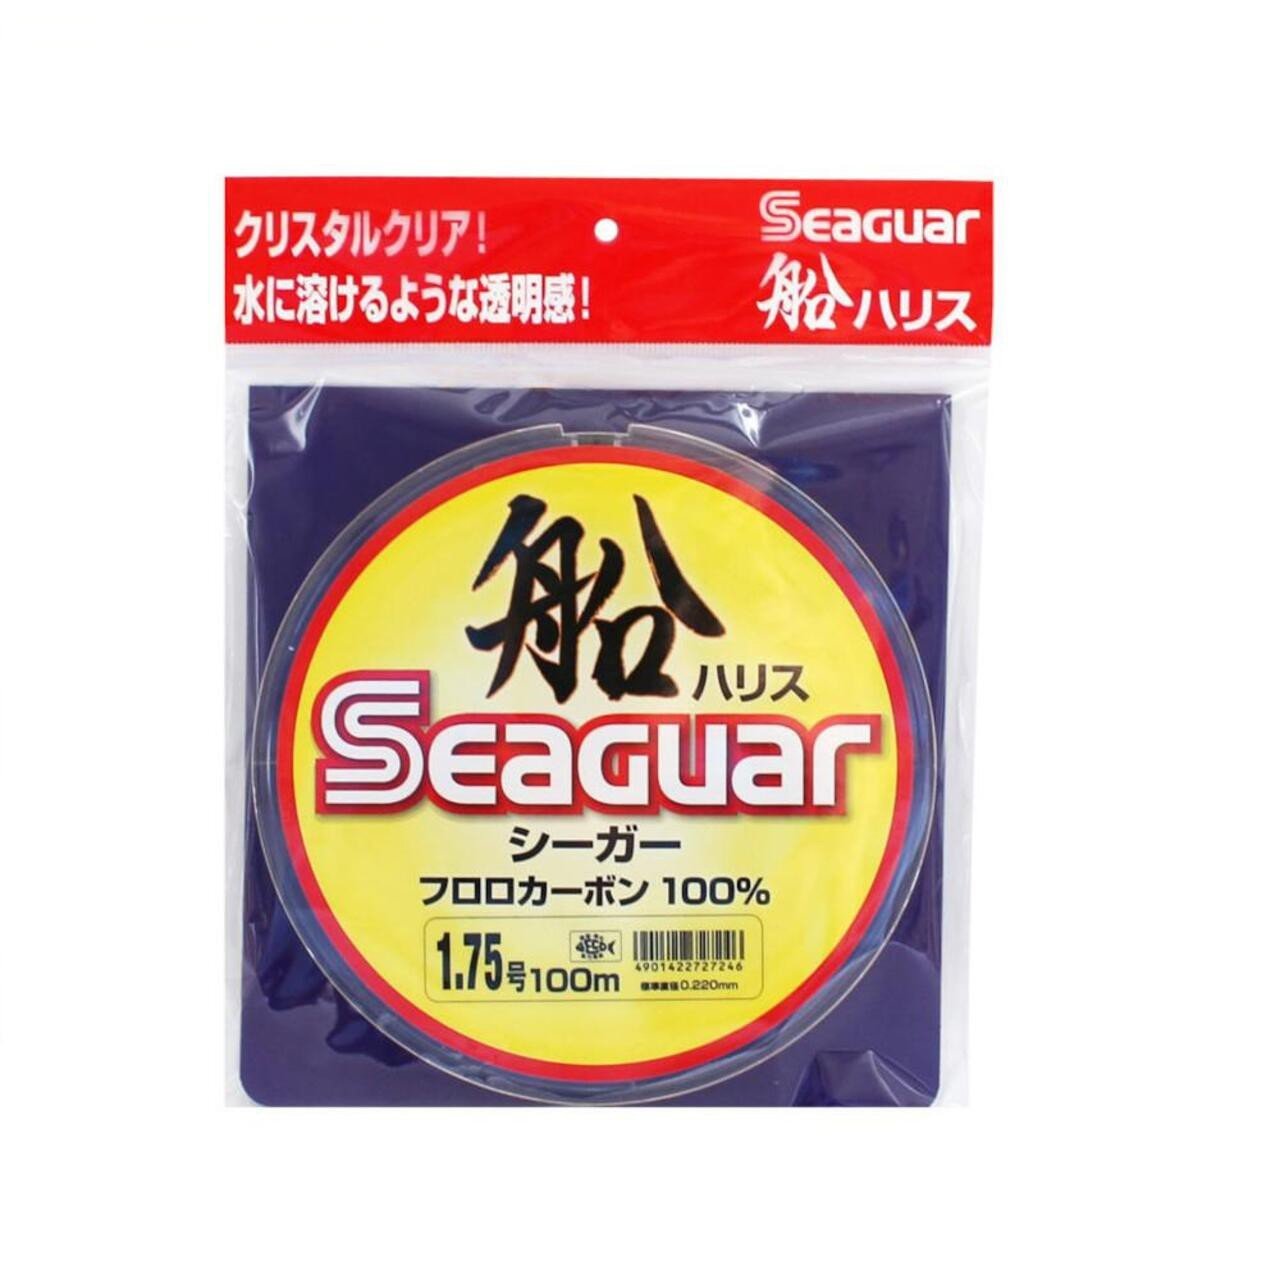 Seaguar Fune Harisu %100 Fluoro Carbon Misina 100mt 0.370 mm